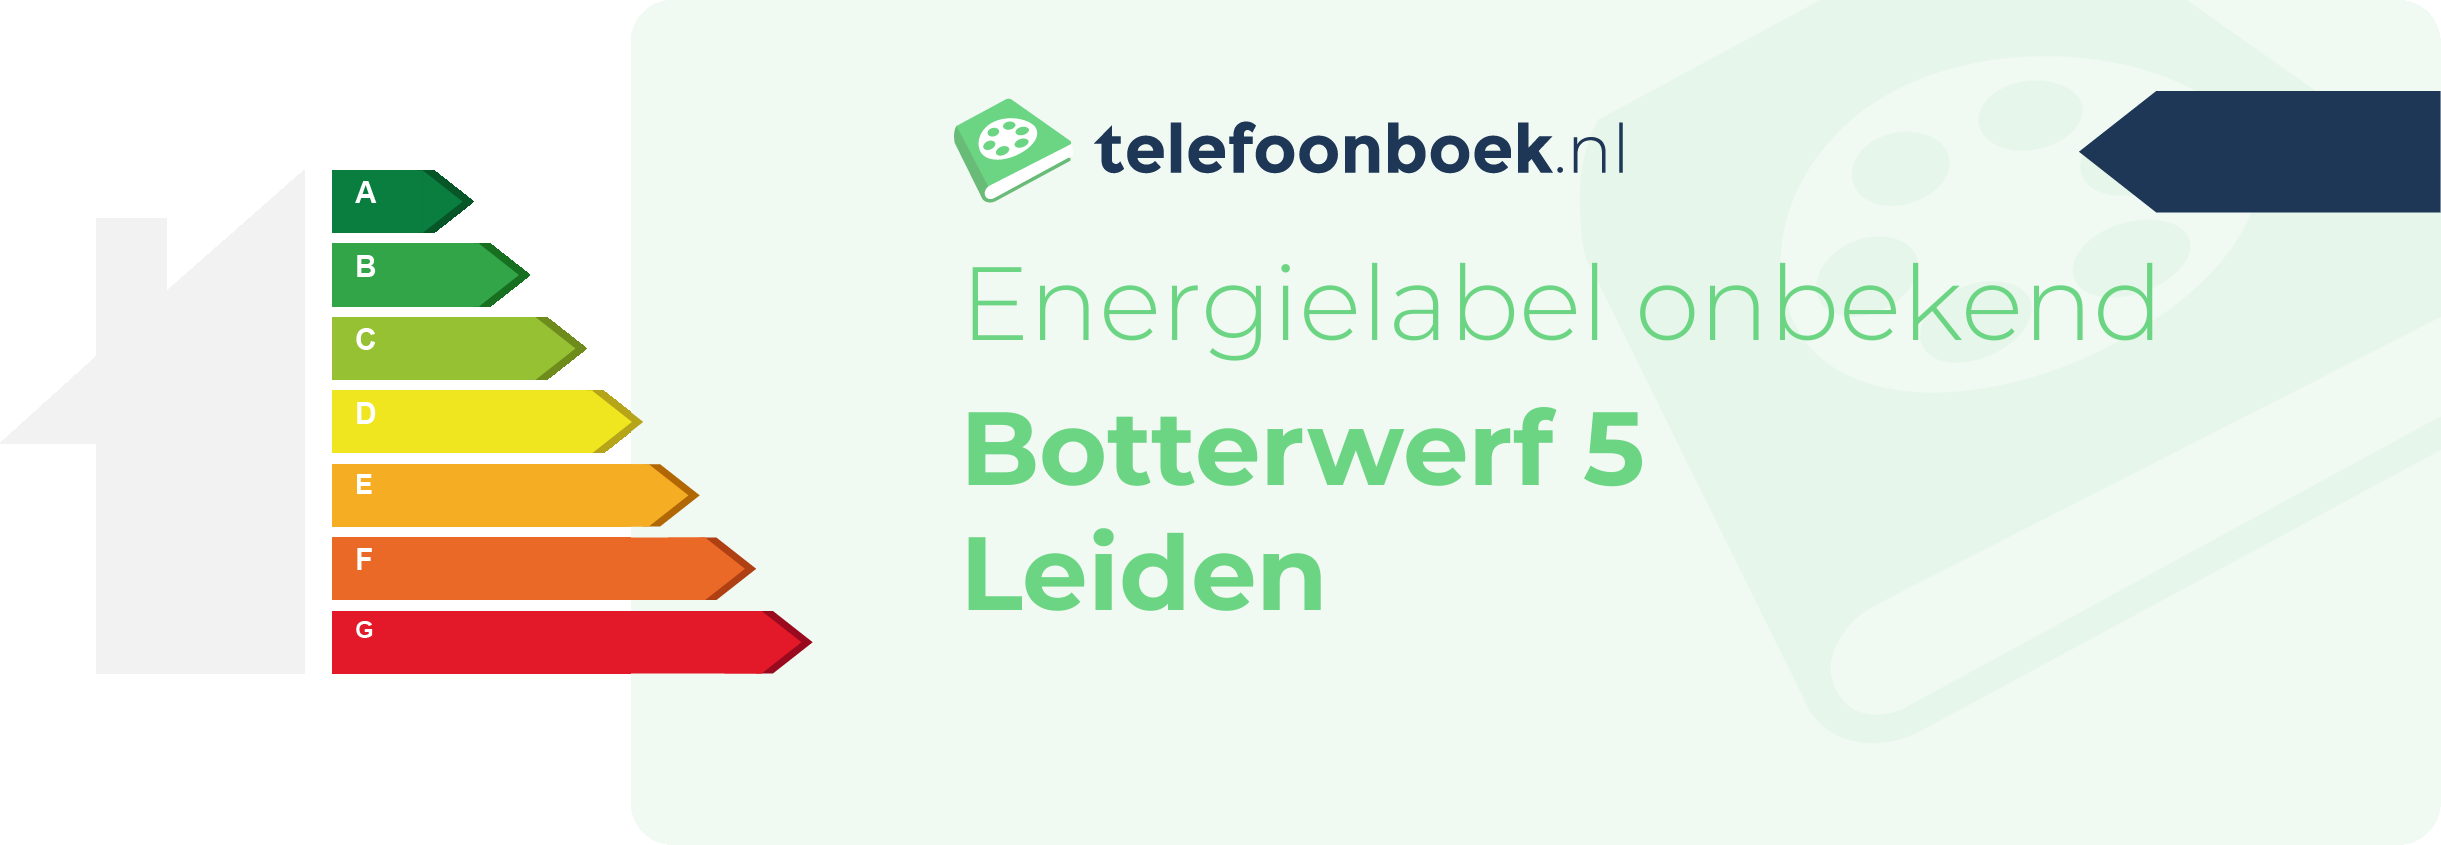 Energielabel Botterwerf 5 Leiden